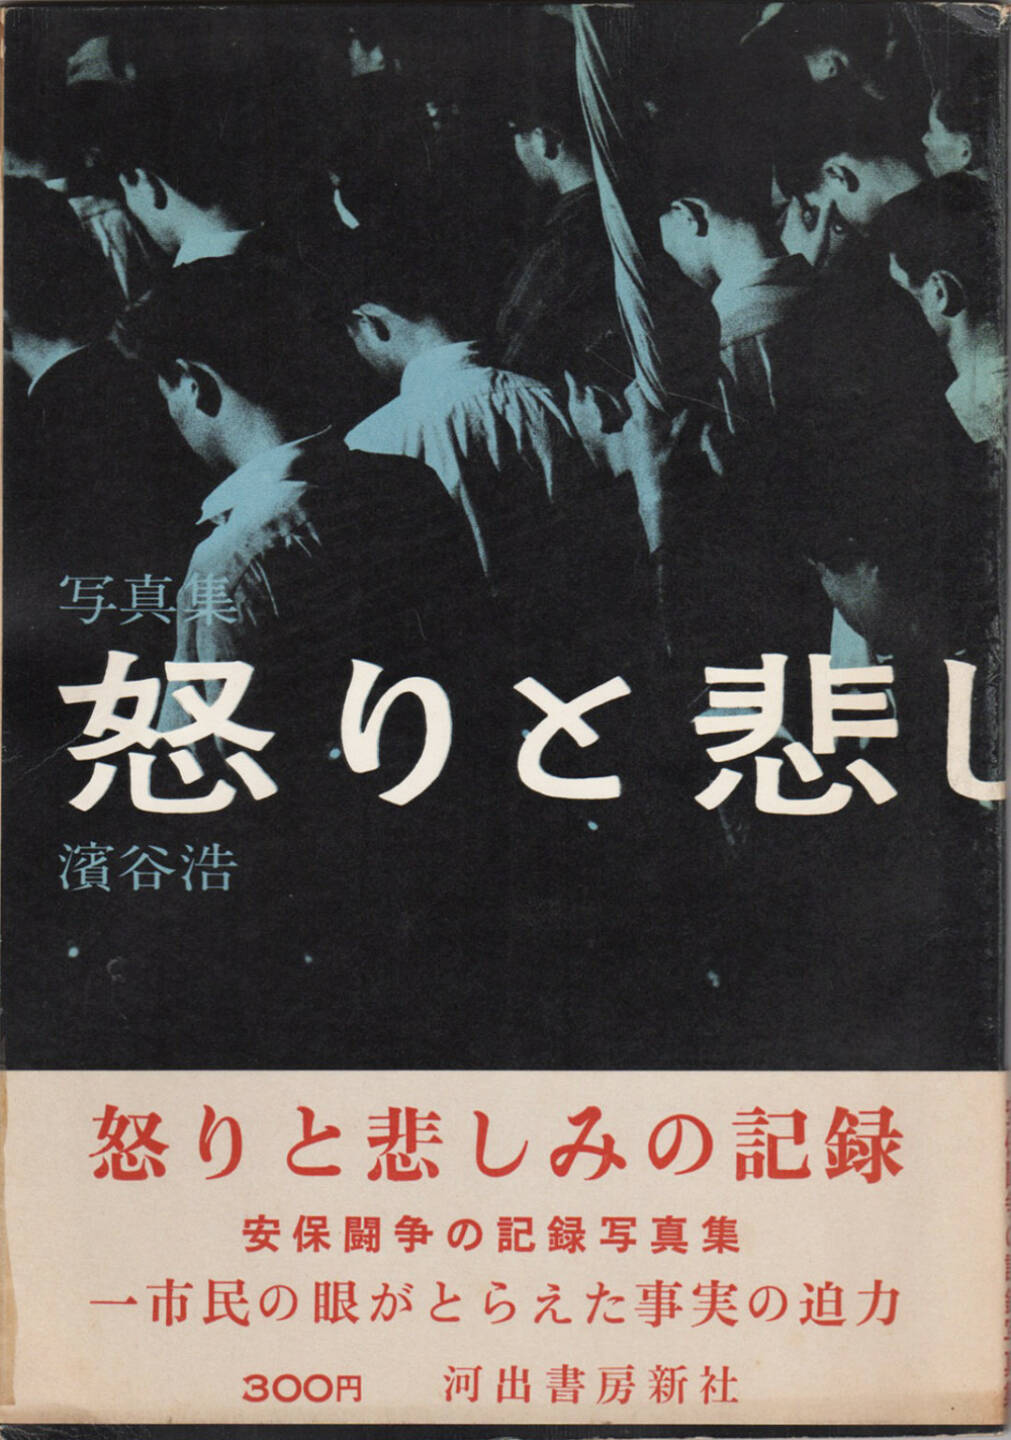 Hiroshi Hamaya - A Chronicle of Grief and Anger (濱谷浩 怒りと悲しみの記録), Kawade Shobo Shinsha 1960, Cover - http://josefchladek.com/book/hiroshi_hamaya_-_a_chronicle_of_grief_and_anger